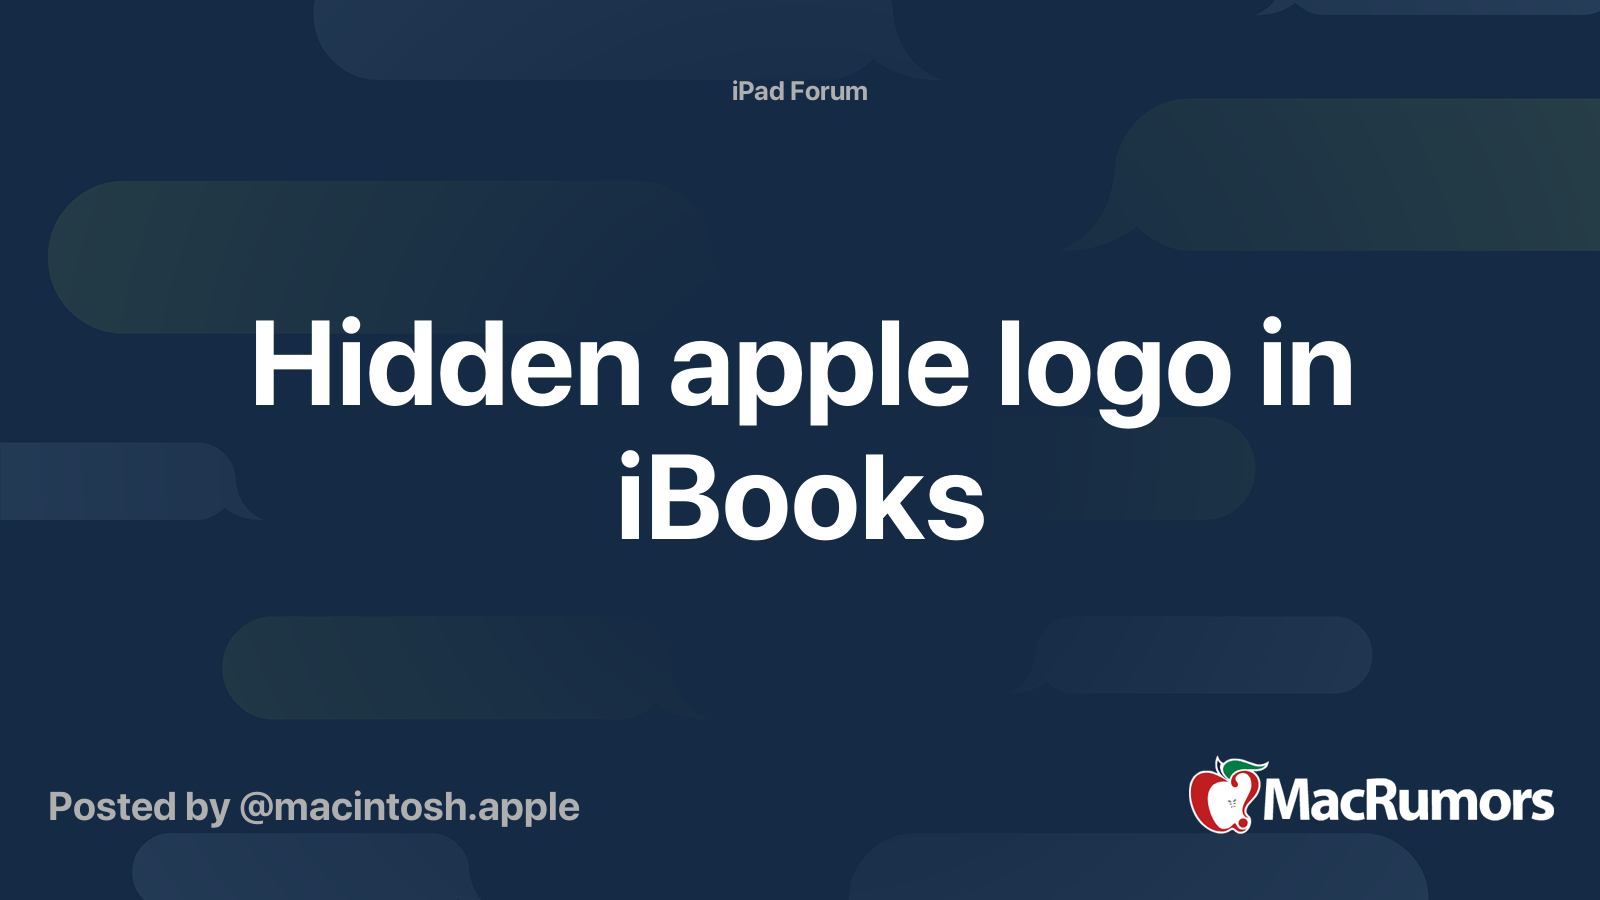 ibookstore logo